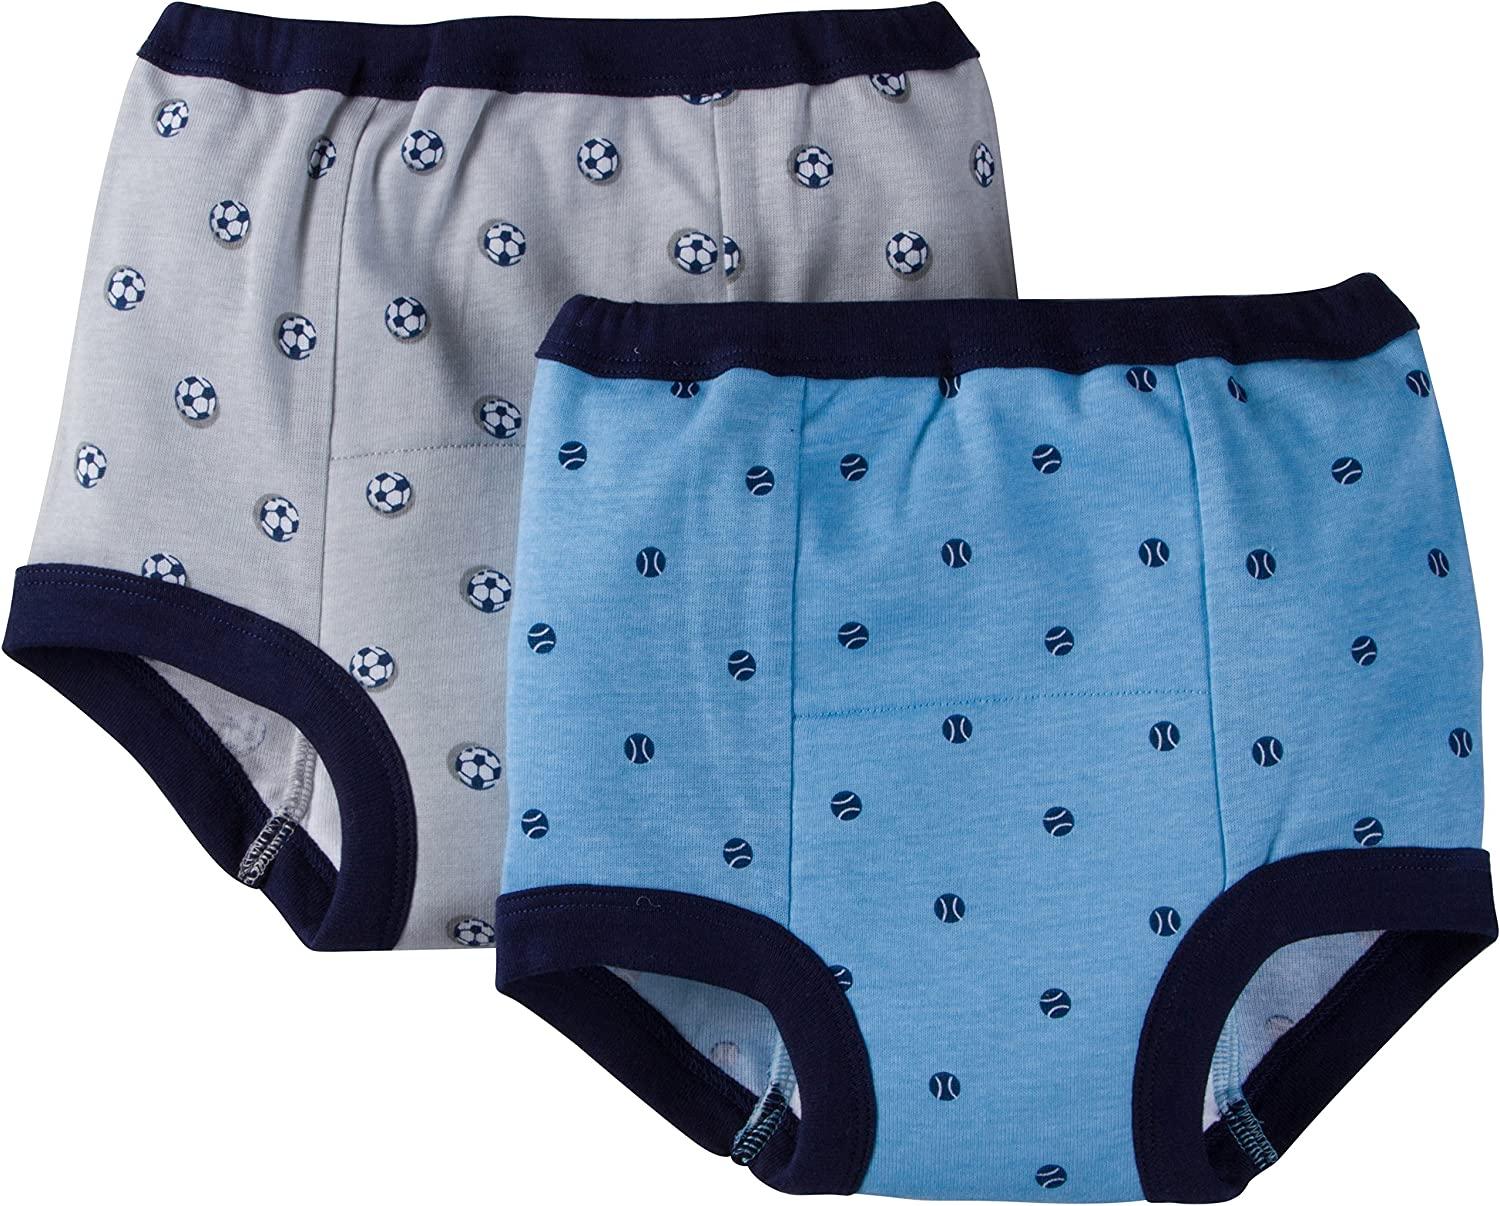 Gerber Baby Boys Infant Toddler 4 Pack Potty Training Pants